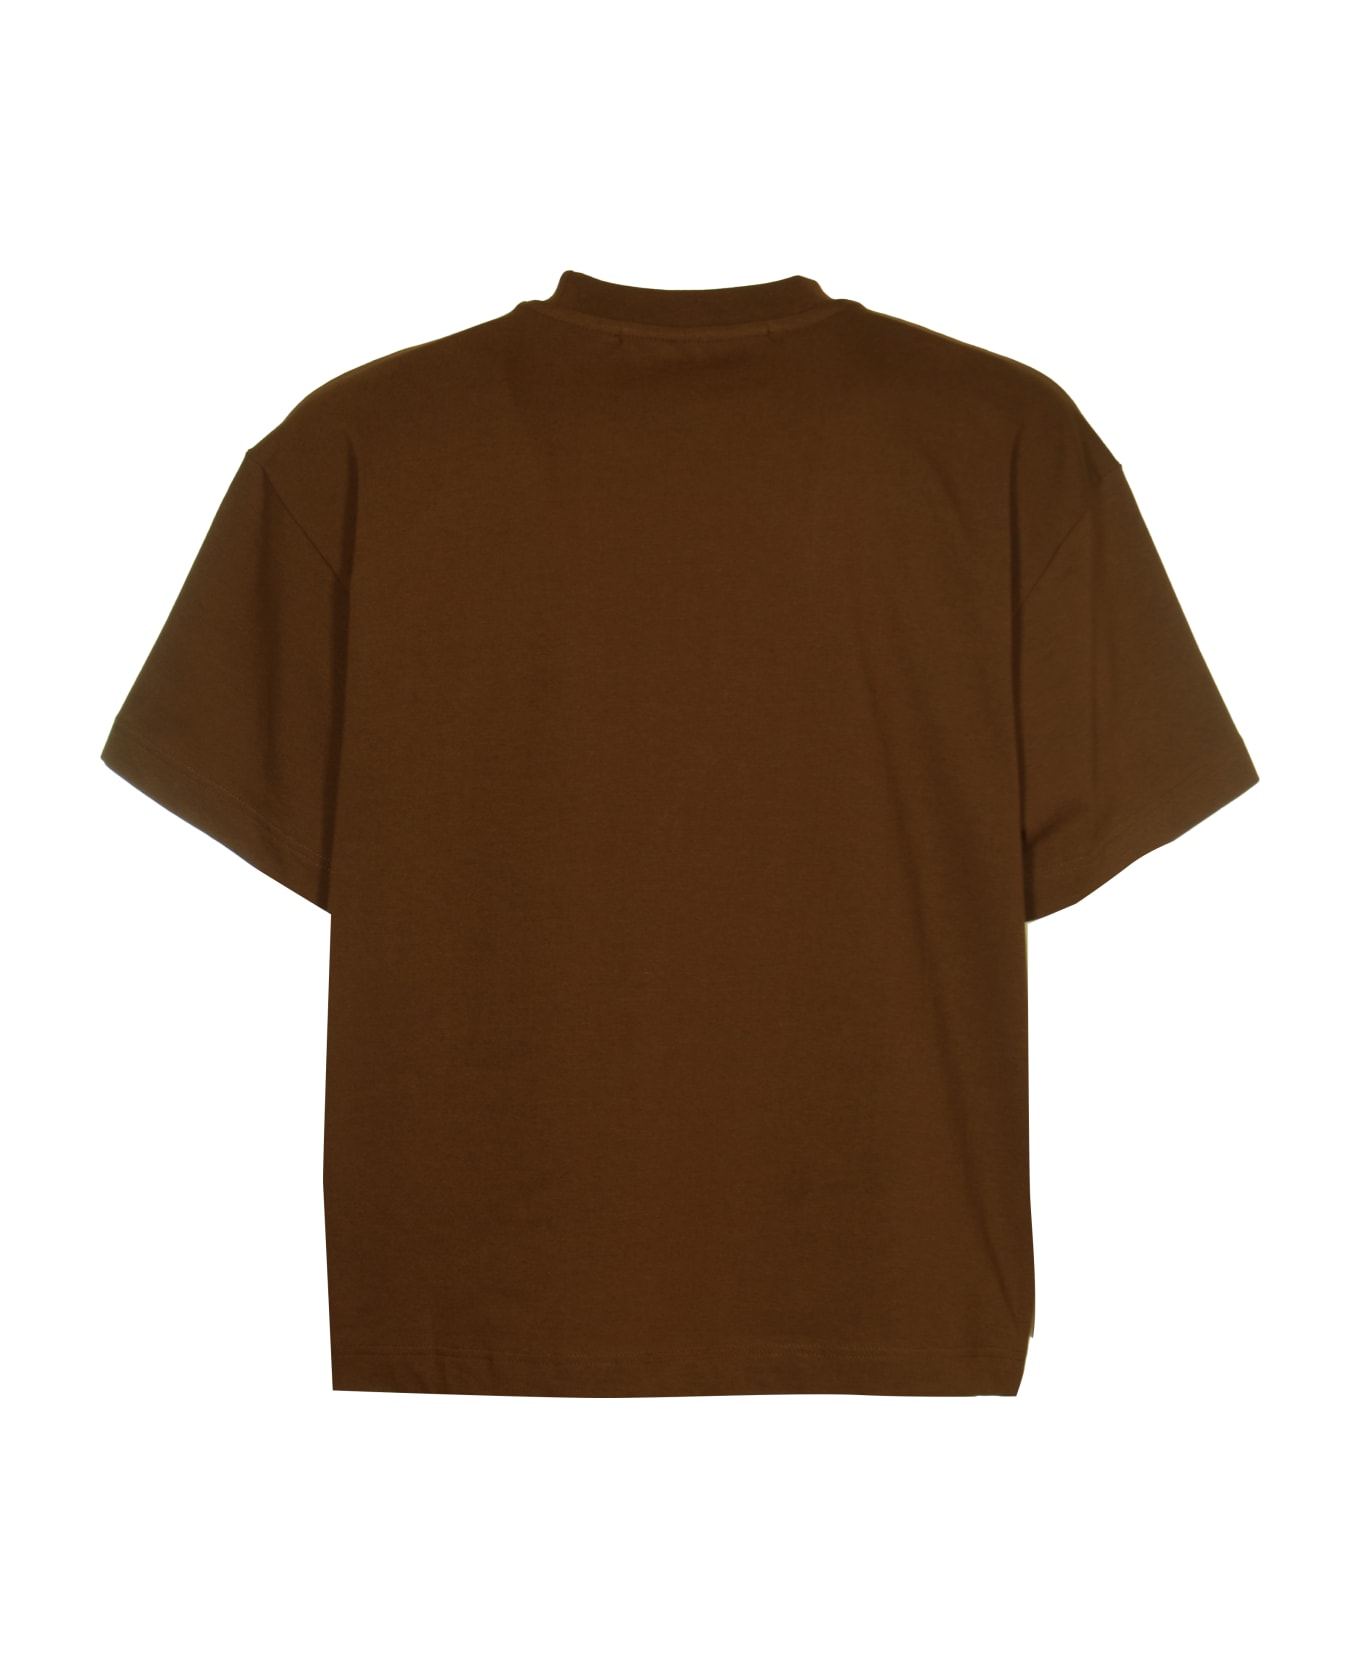 Séfr Atelier T-shirt - Heavy Brown